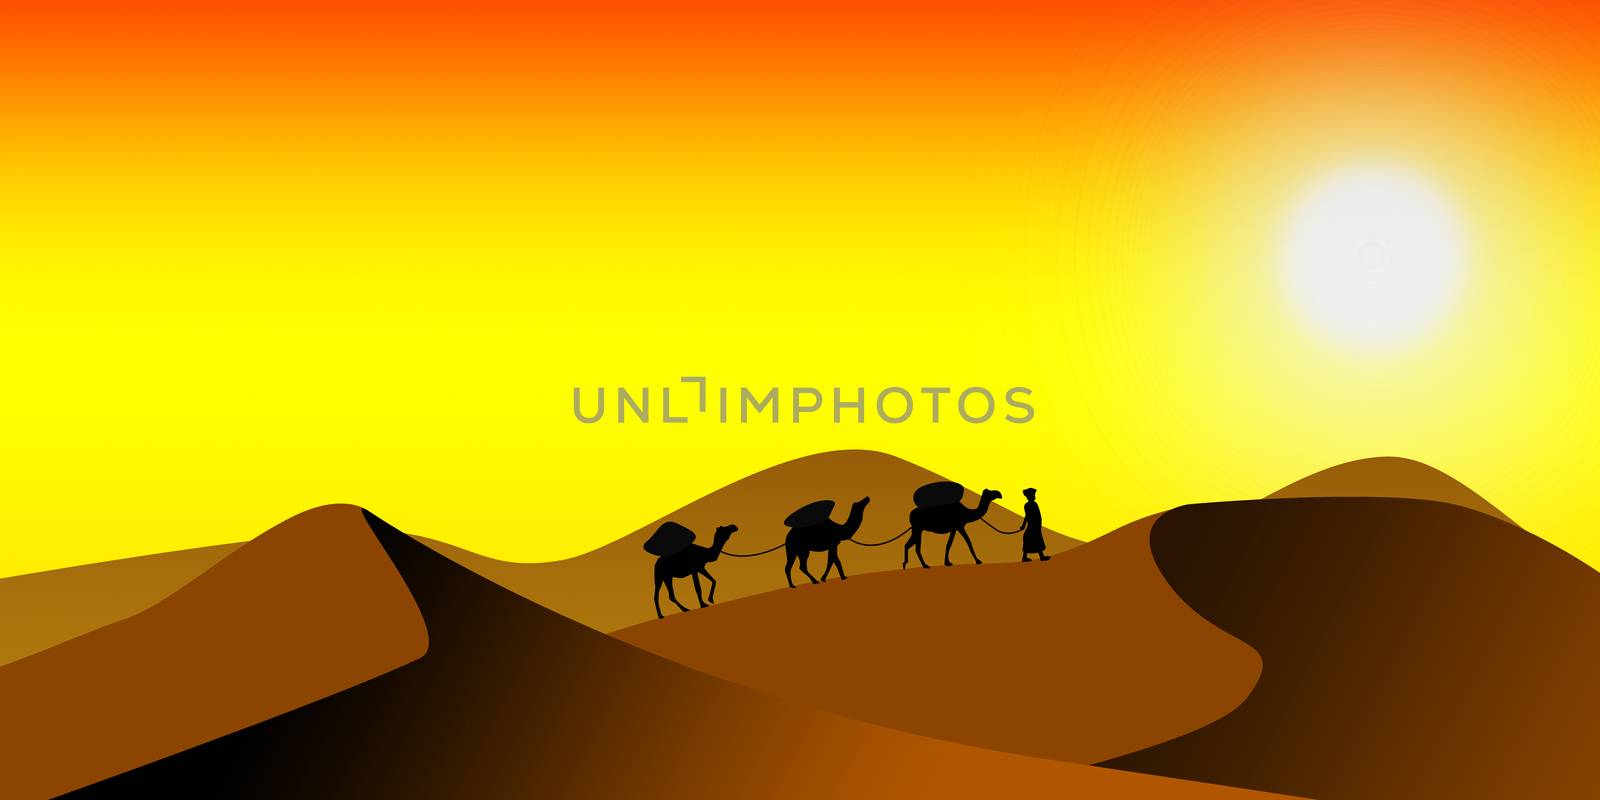 Desert dunes with camels walking in the desert, 3D rendering